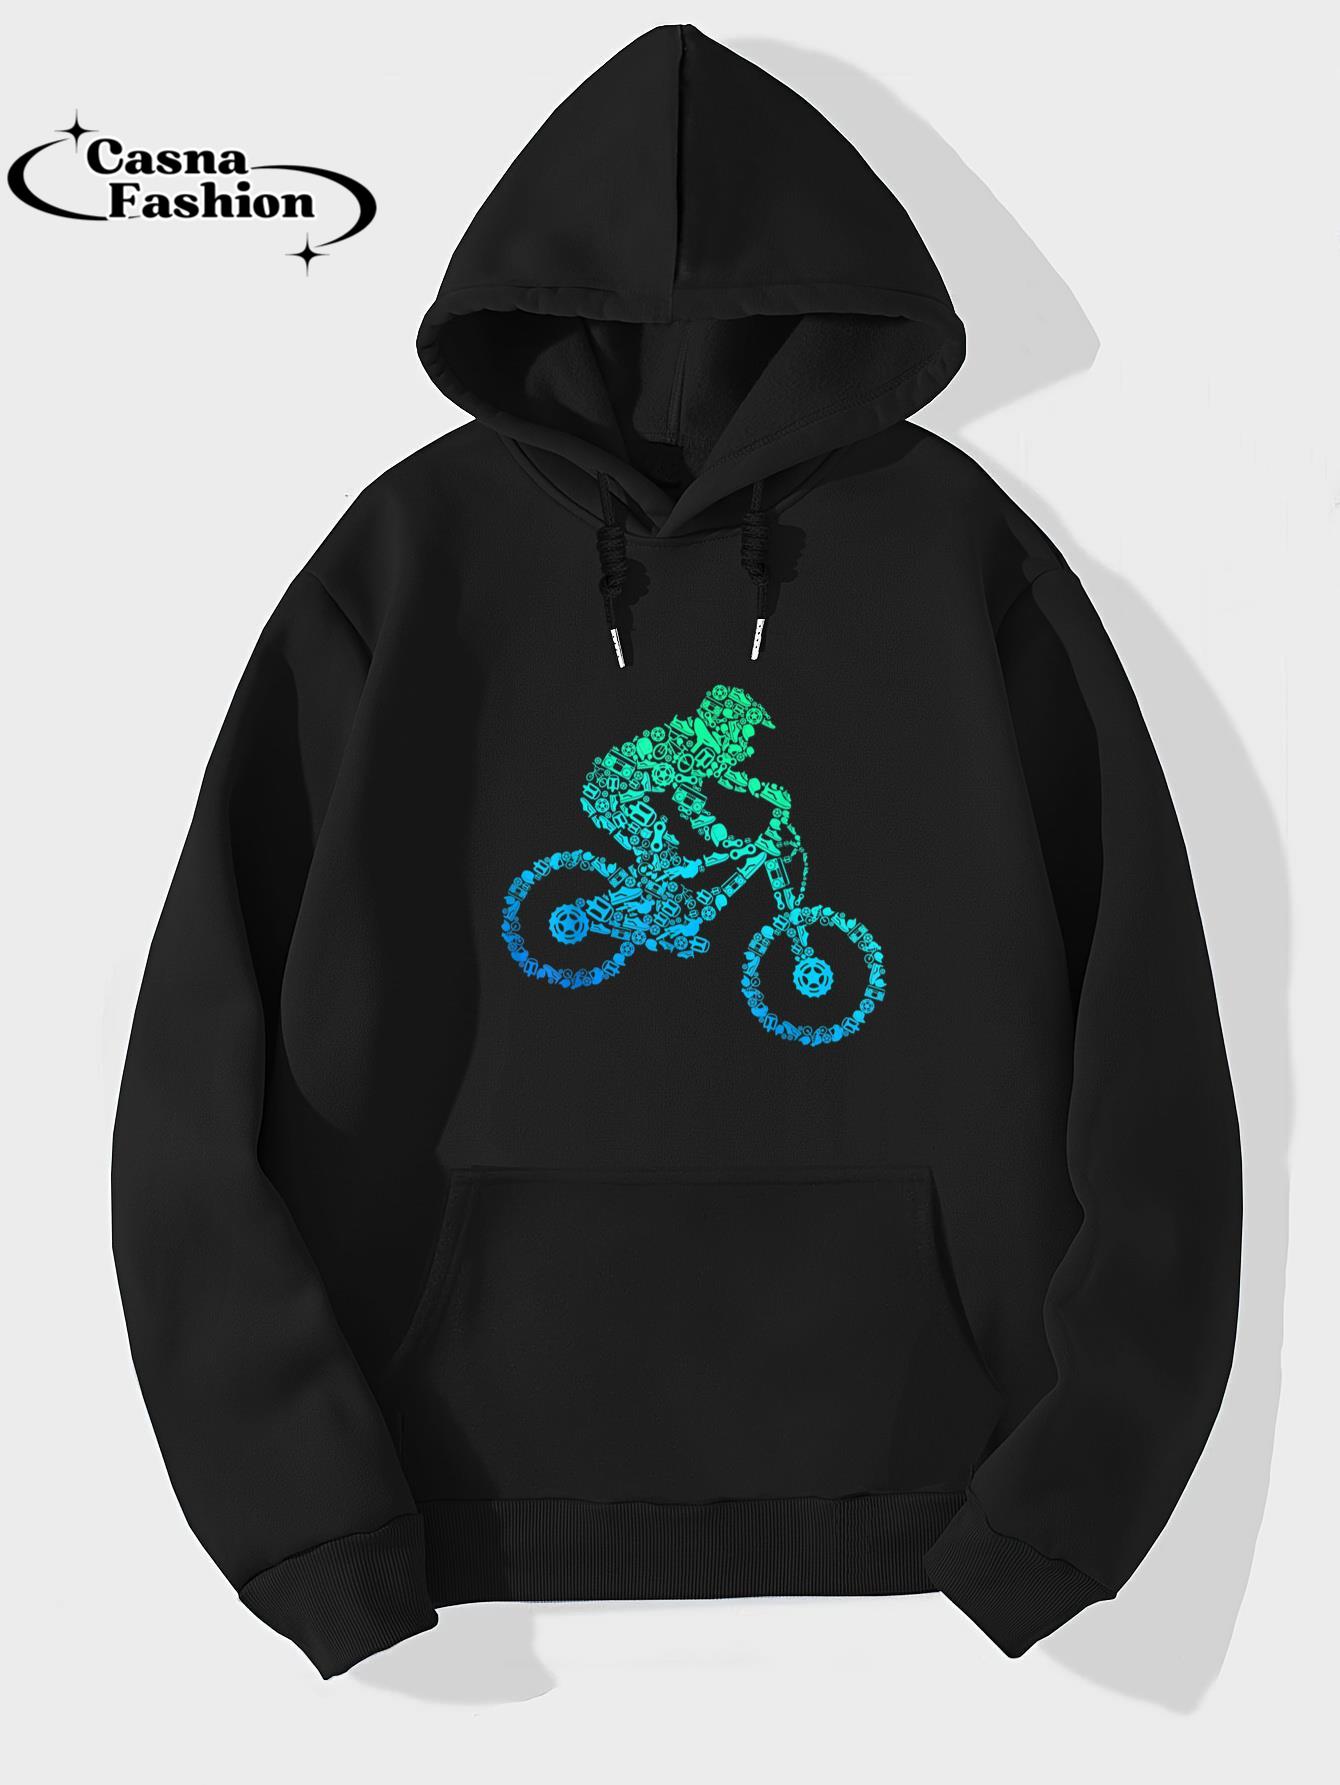 casnafashion_Hoodie_Mountain Bike MTB Downhill Biking Cycling Biker Kids Boys T-Shirt_hoodie_black hoodie